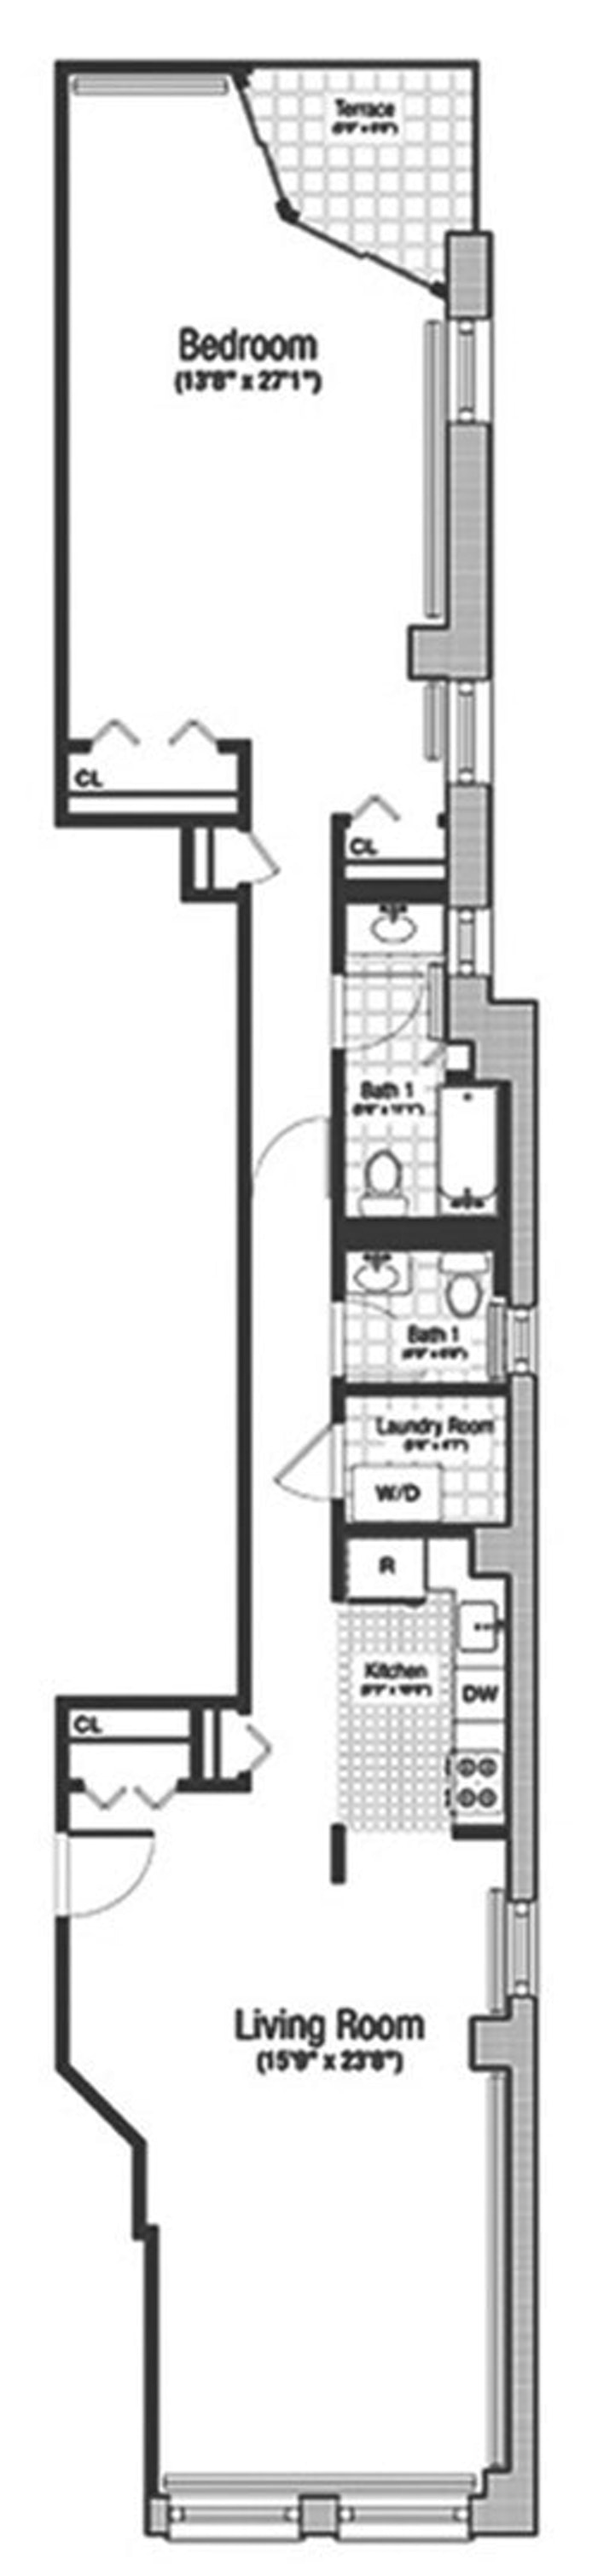 Floorplan for 36 Laight Street, PHA